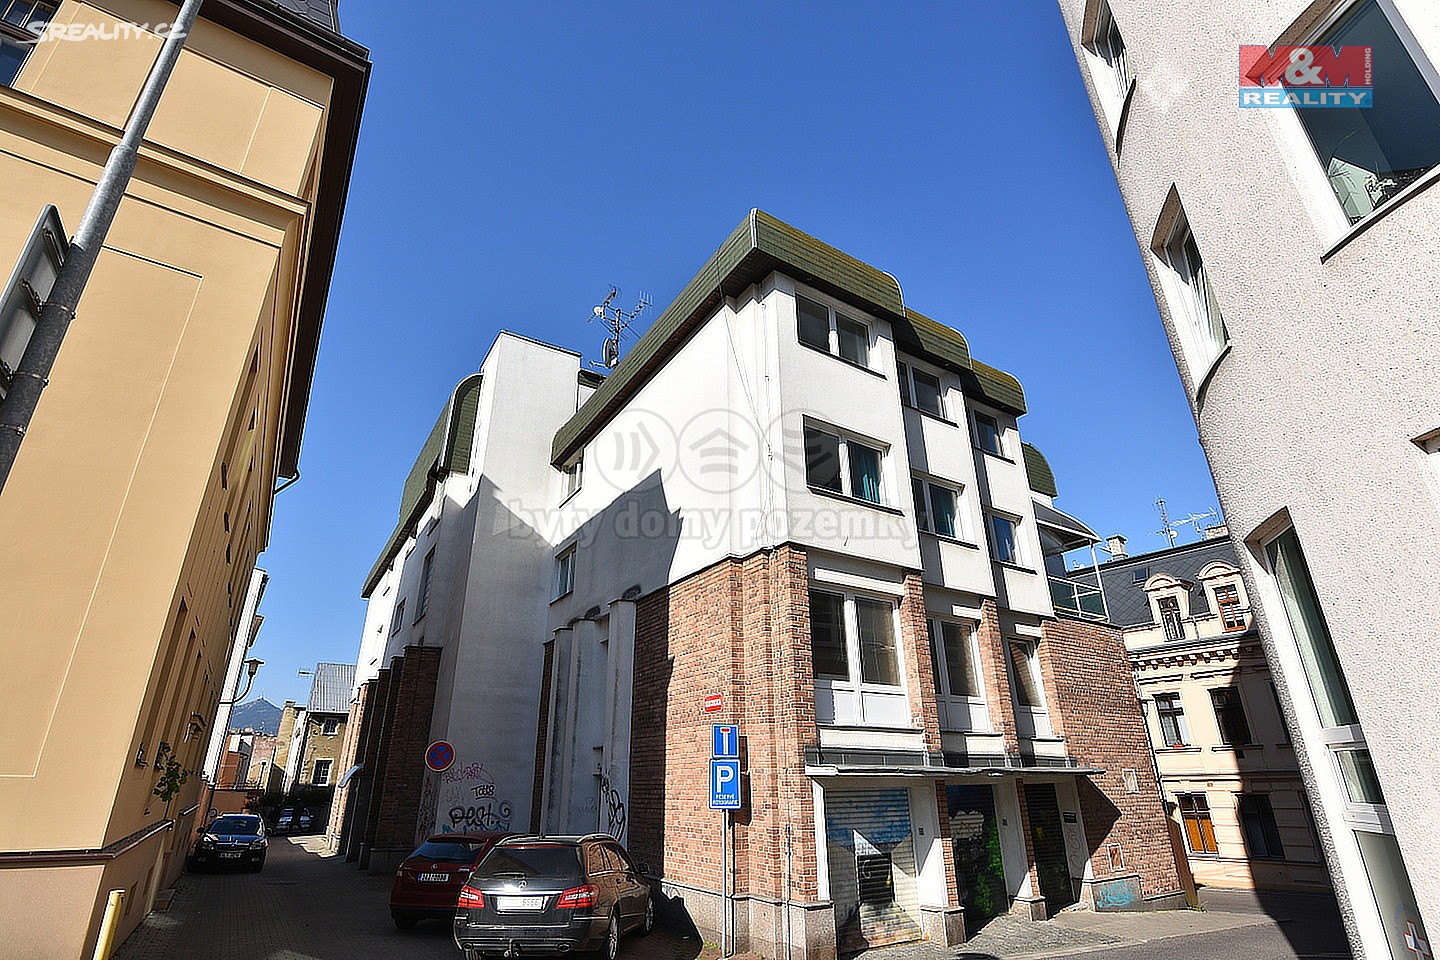 Pronájem bytu 2+1 76 m², Bernardova, Liberec - Liberec I-Staré Město